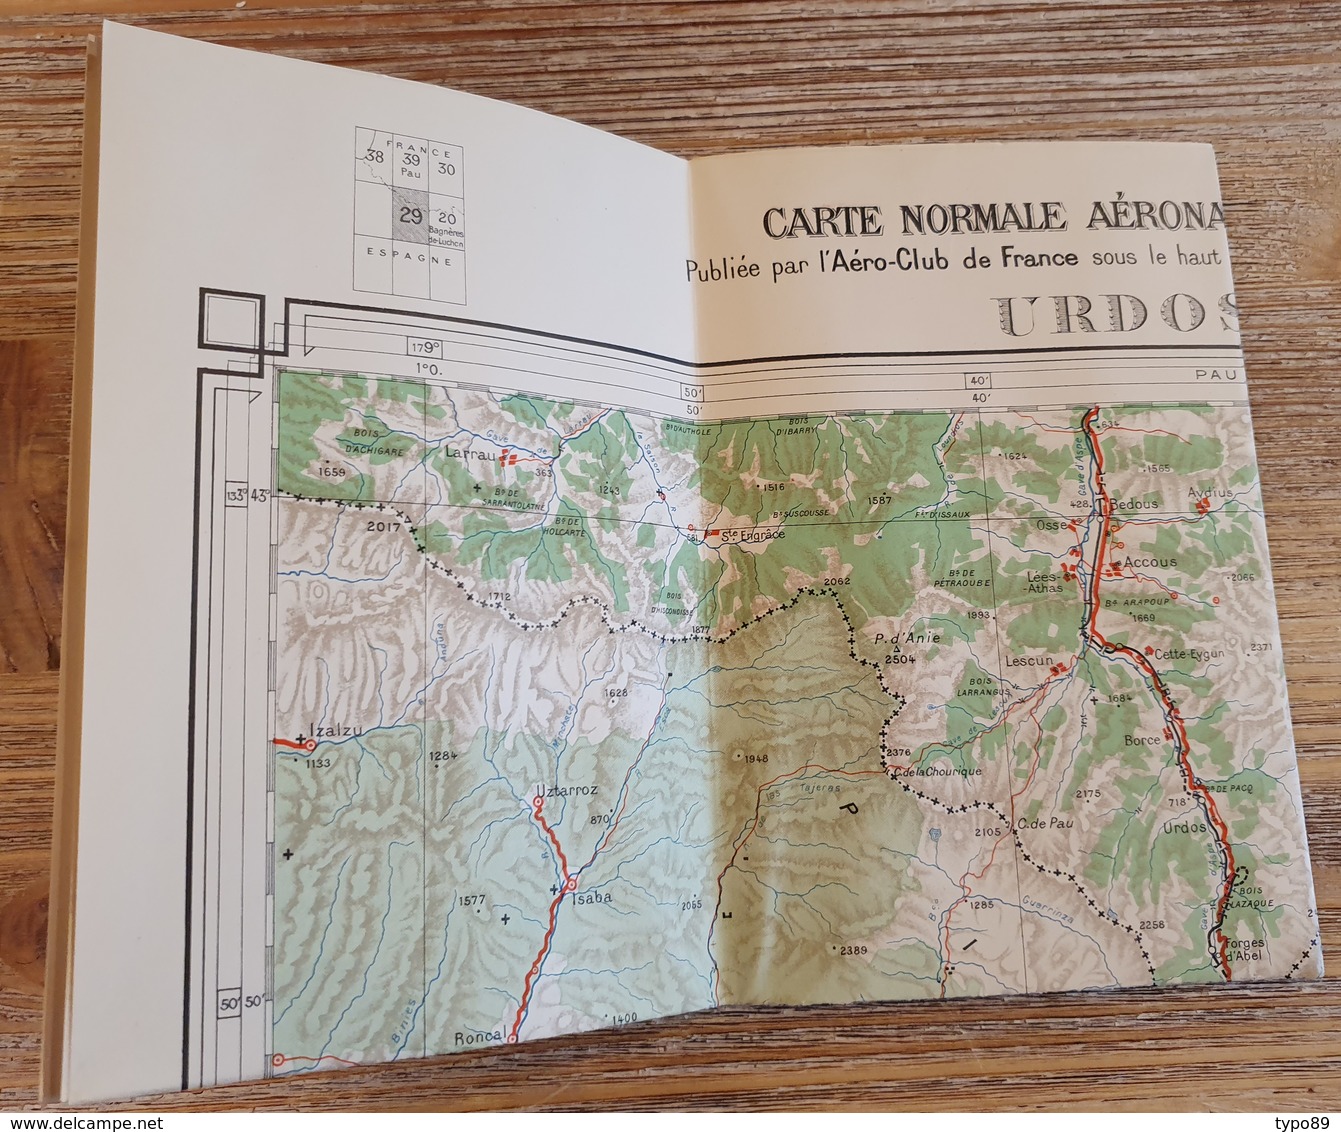 814 - CARTE DE L'AEROCLUB DE FRANCE - URDOS - 1/200000è - 1932 - Blondel La Rougery - Kaarten & Atlas